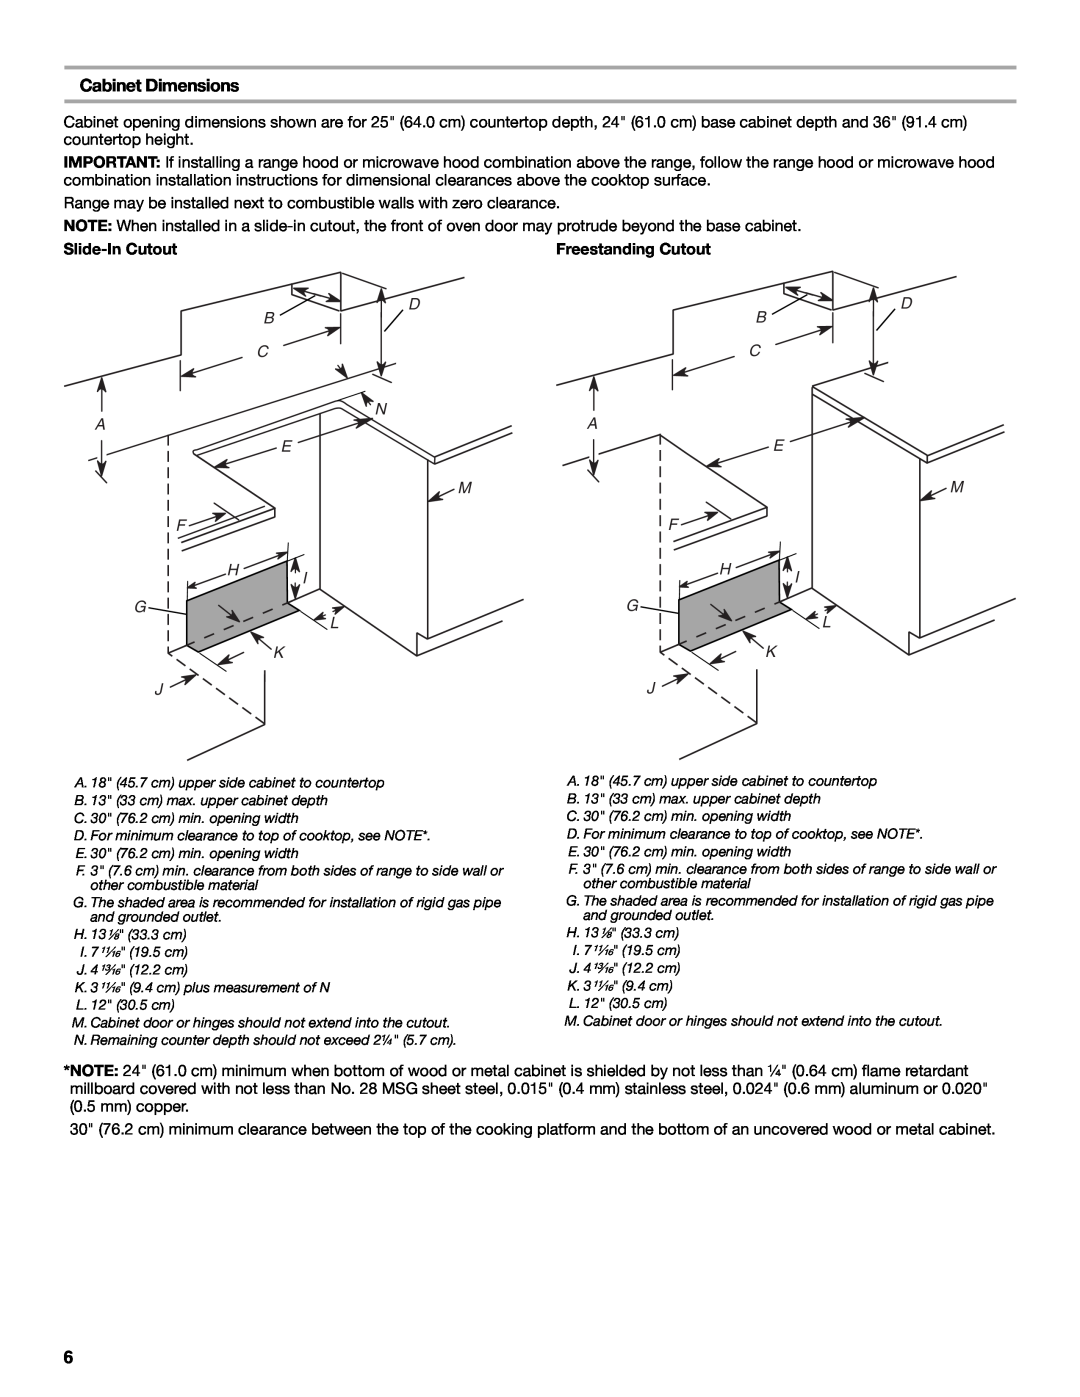 Whirlpool W10665256D Cabinet Dimensions, Slide-In Cutout, Freestanding Cutout, B C A E F H G K J, D N I L 